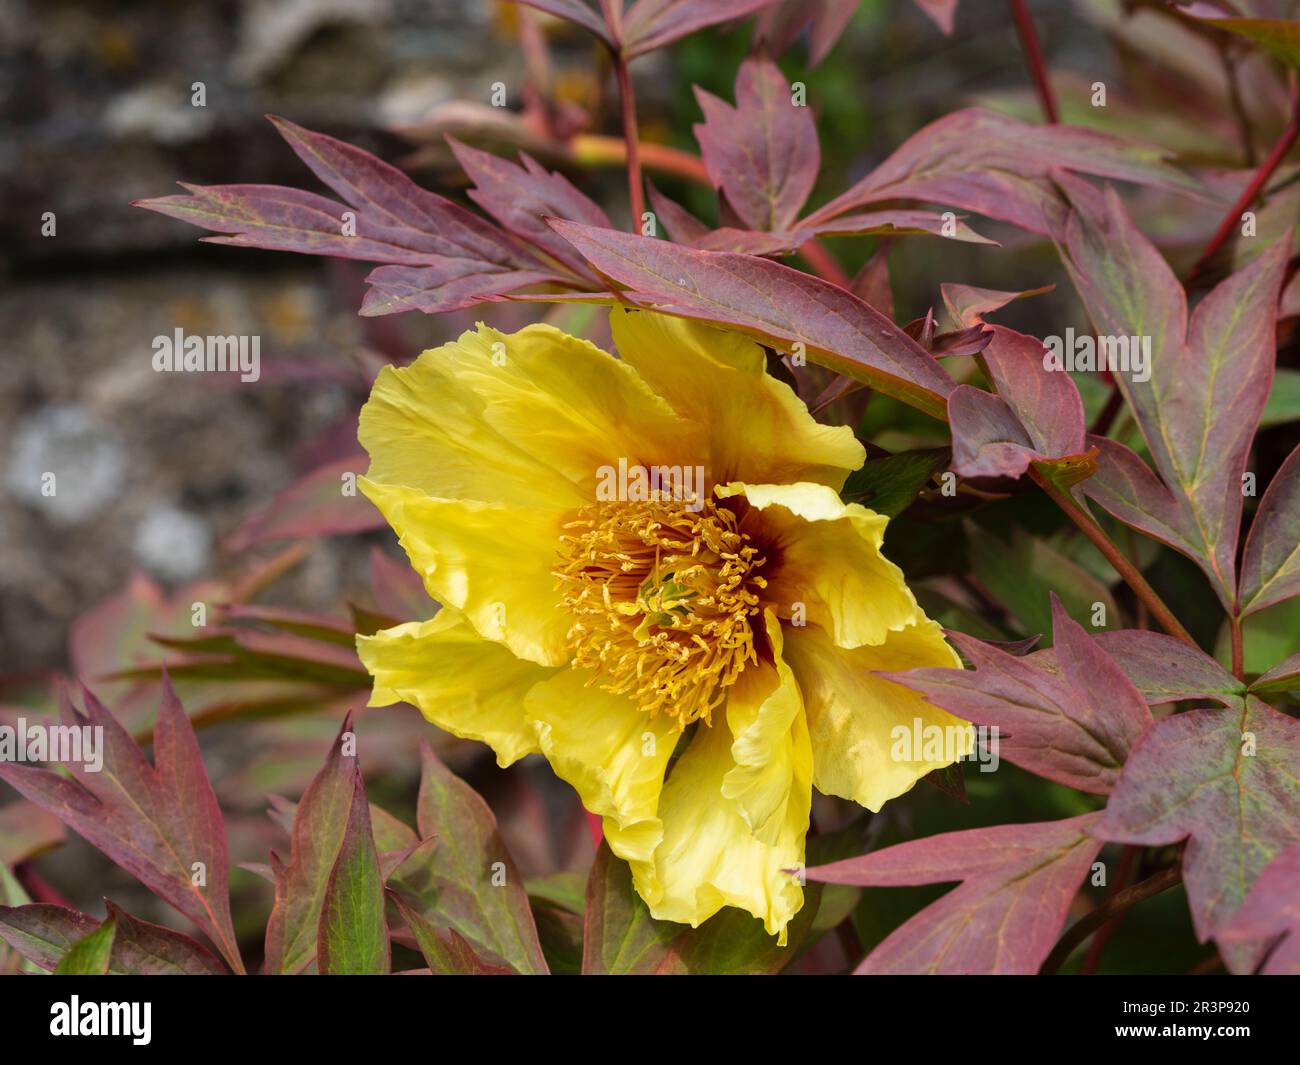 Yellow flower of the hardy, late spring flowering lutea group tree peony, Paeonia 'Helene Martin' Stock Photo